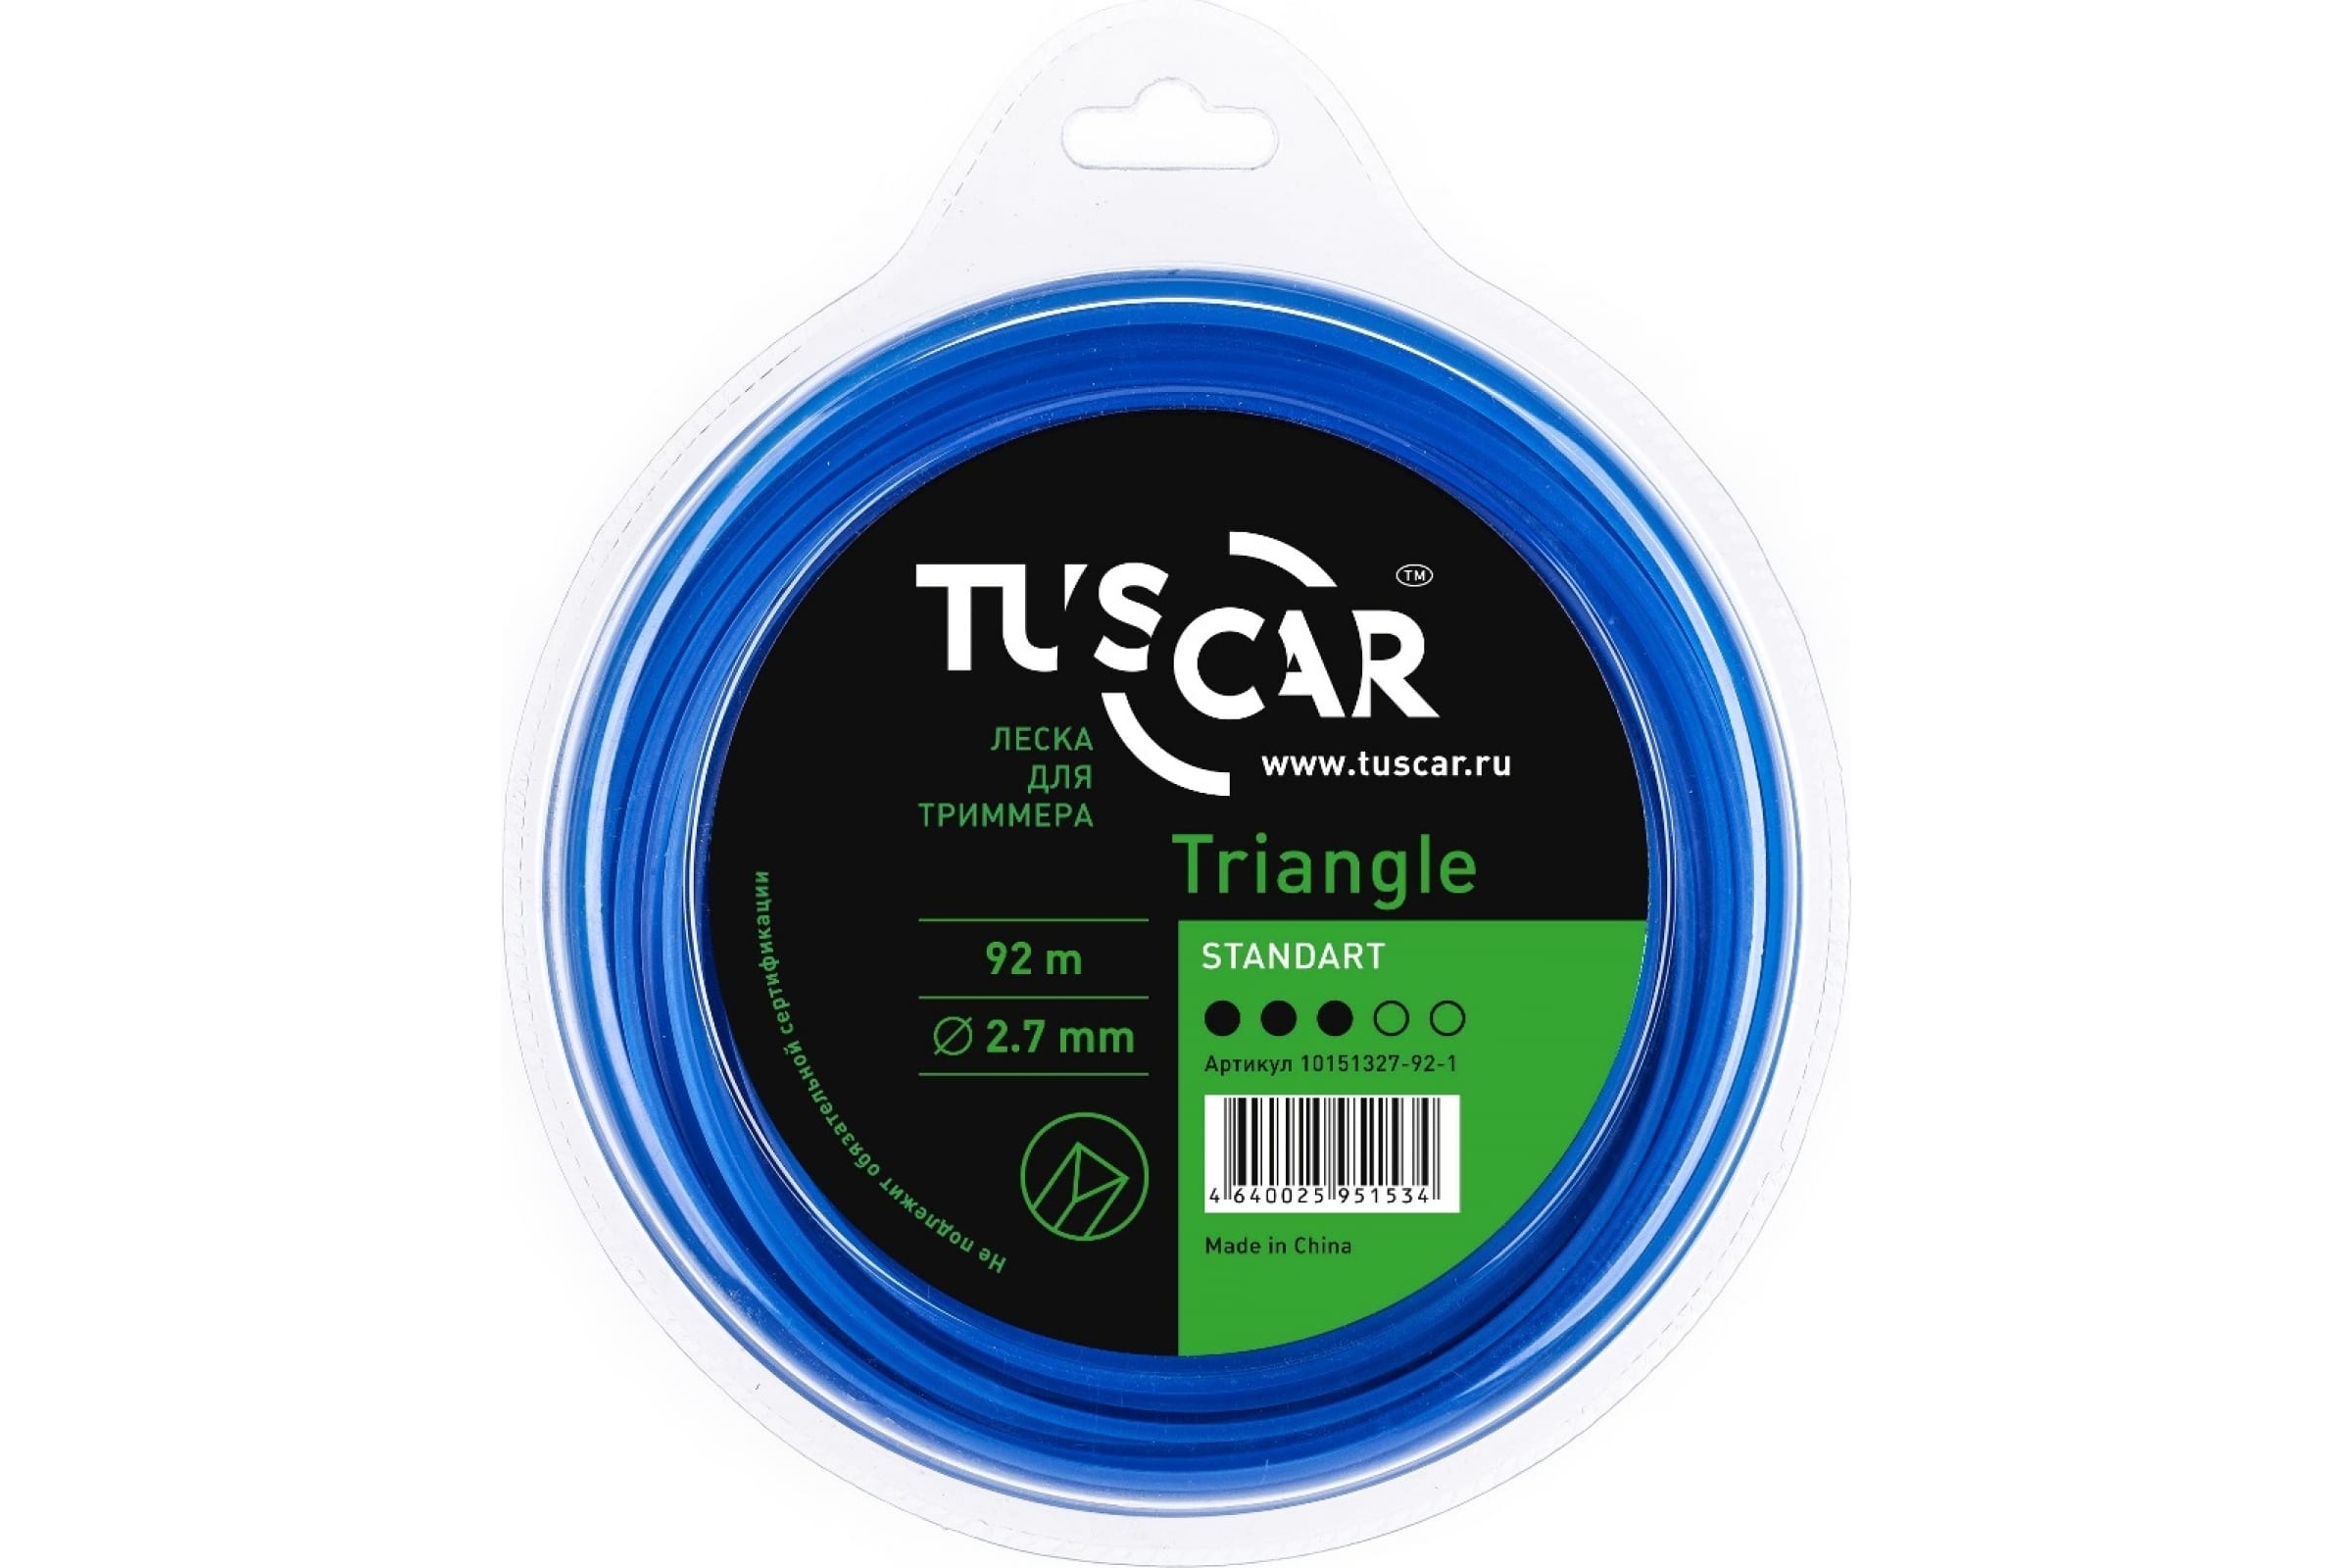 фото Tuscar леска для триммера triangle, standart, 2.7mmx92m 10151327-92-1